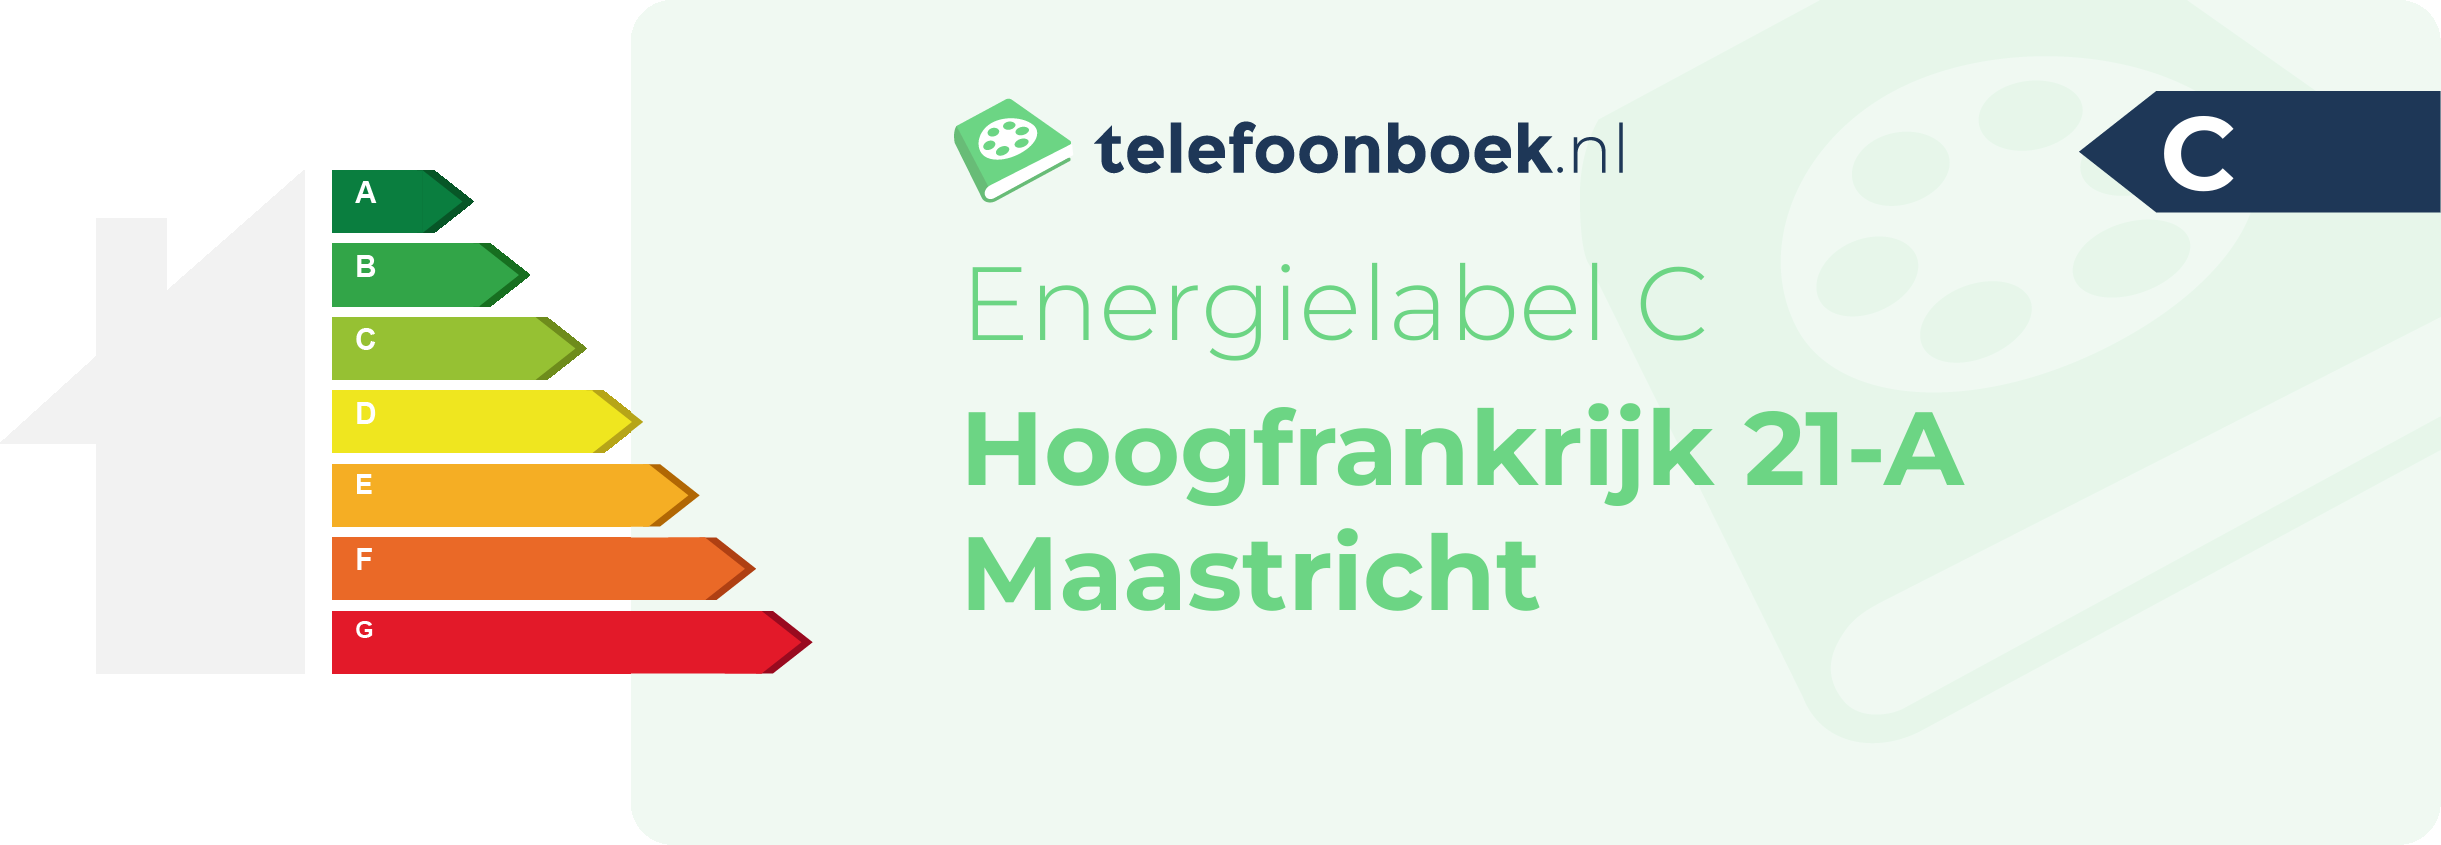 Energielabel Hoogfrankrijk 21-A Maastricht